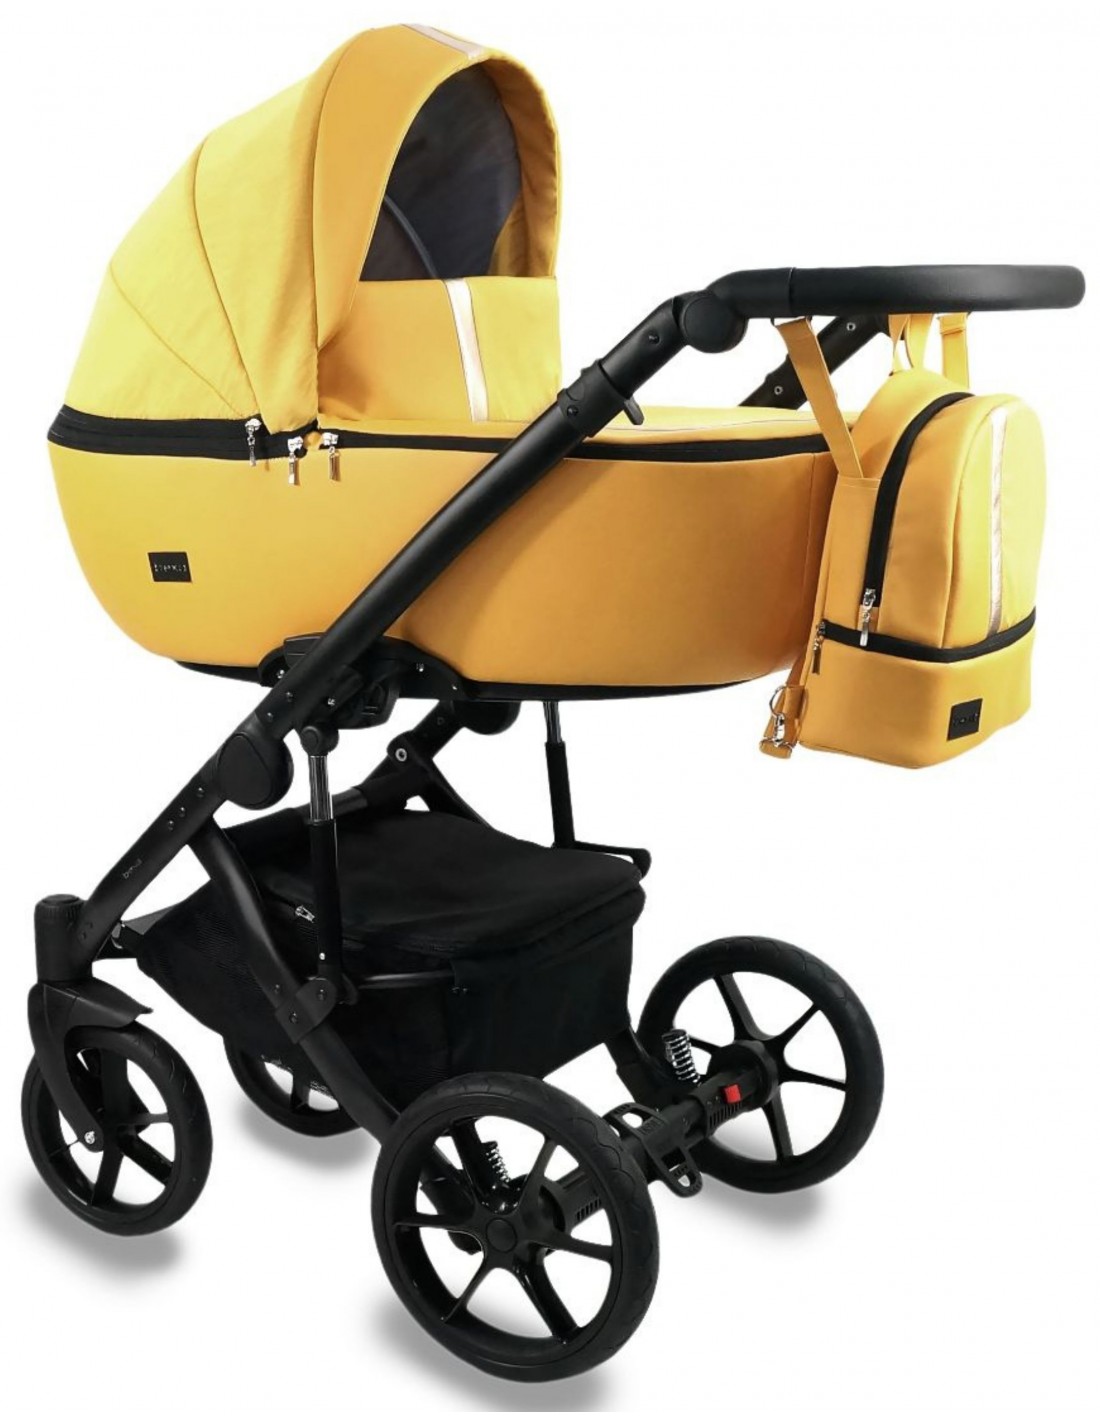 Oferta carrito de bebé Bexa Air con silla de coche. Ahorro